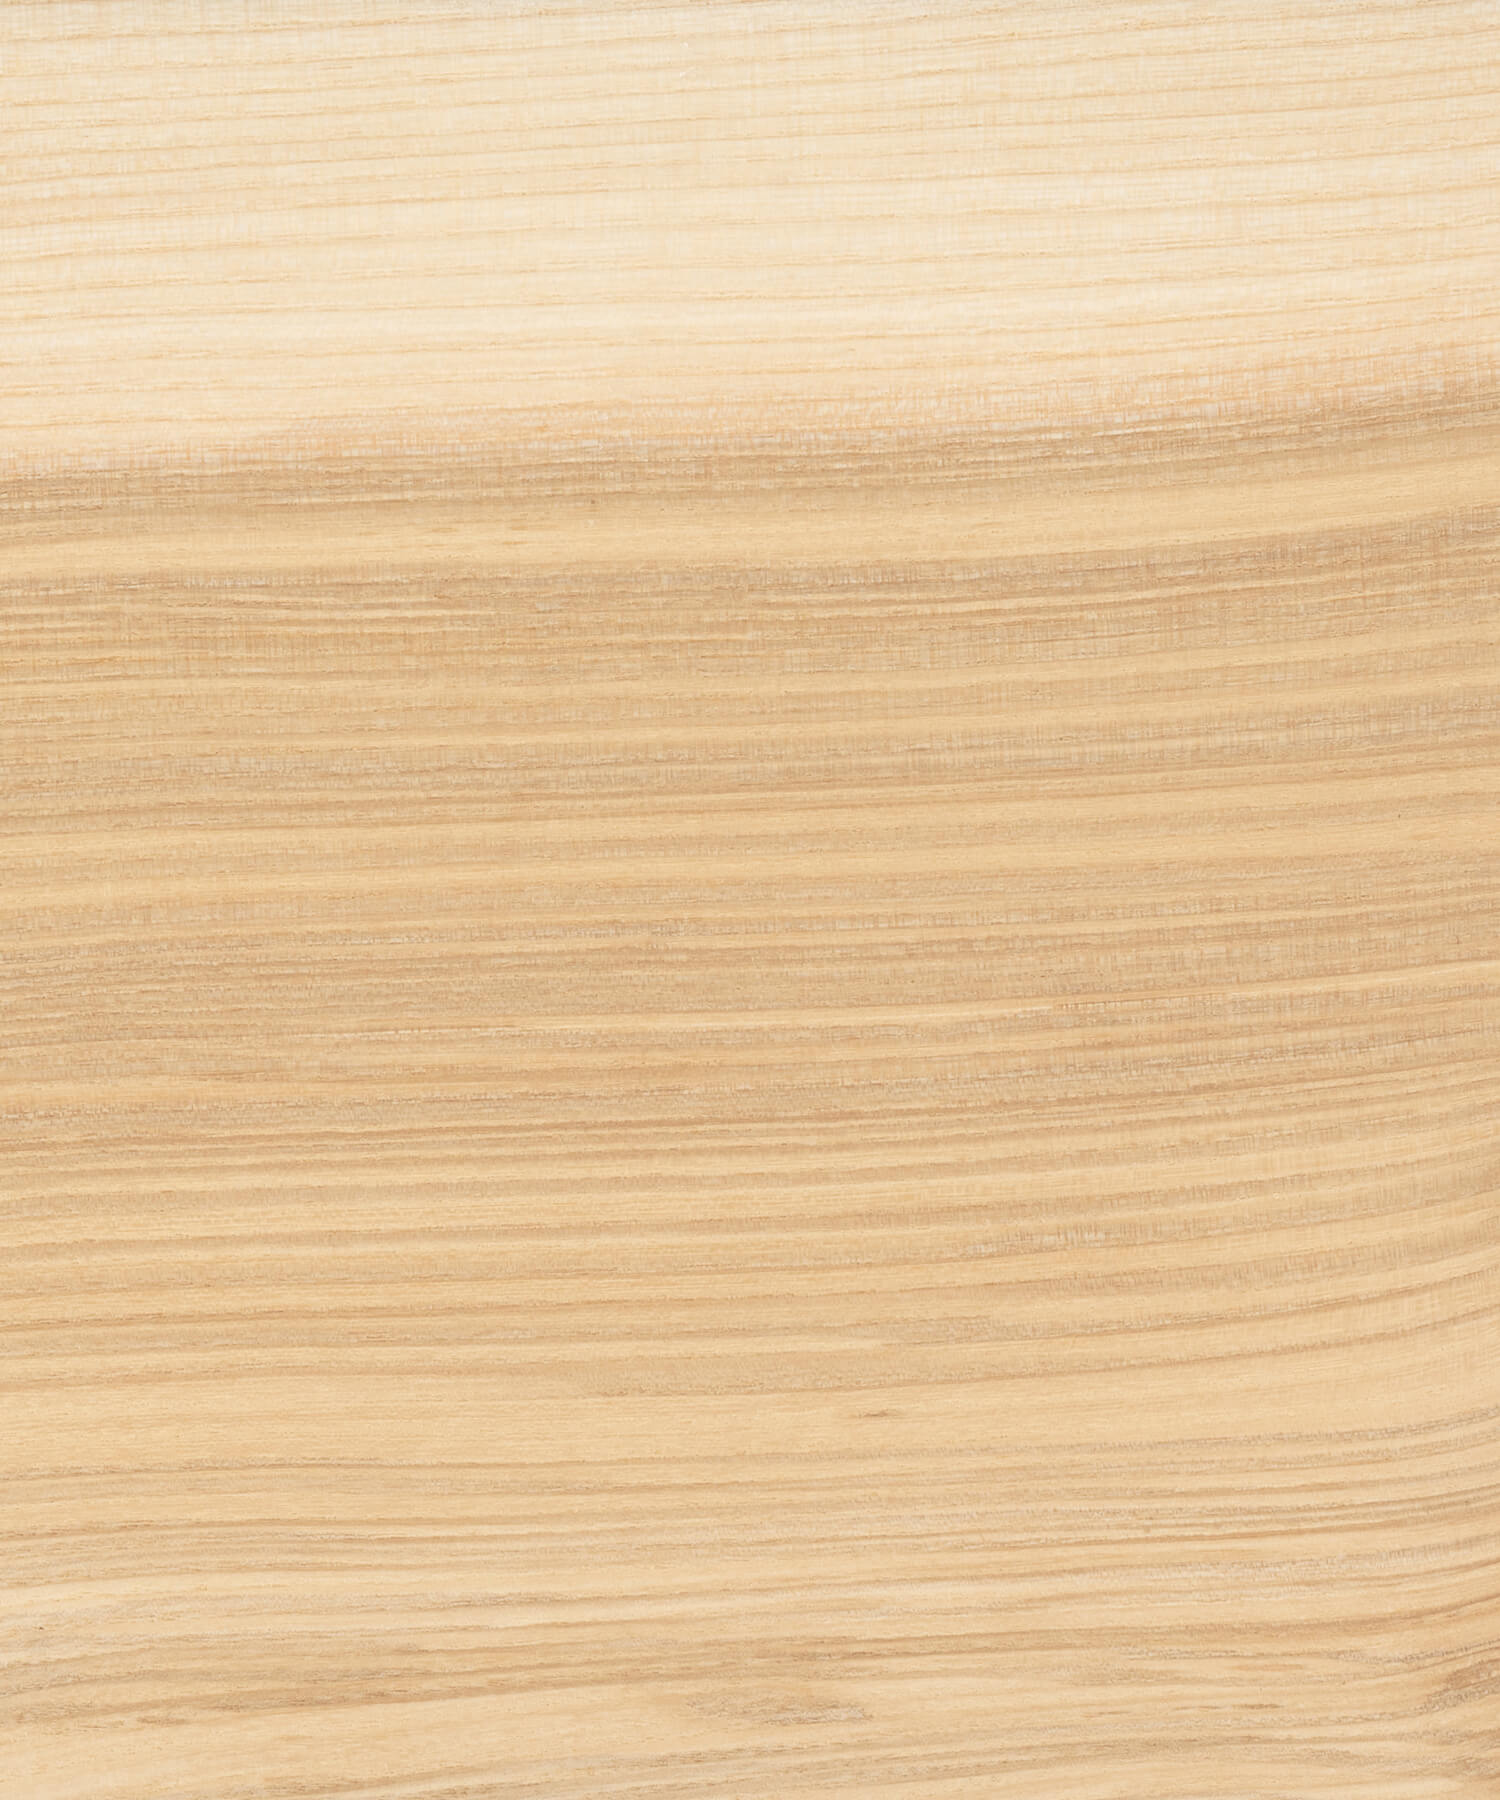 Olive ash timber grain close up